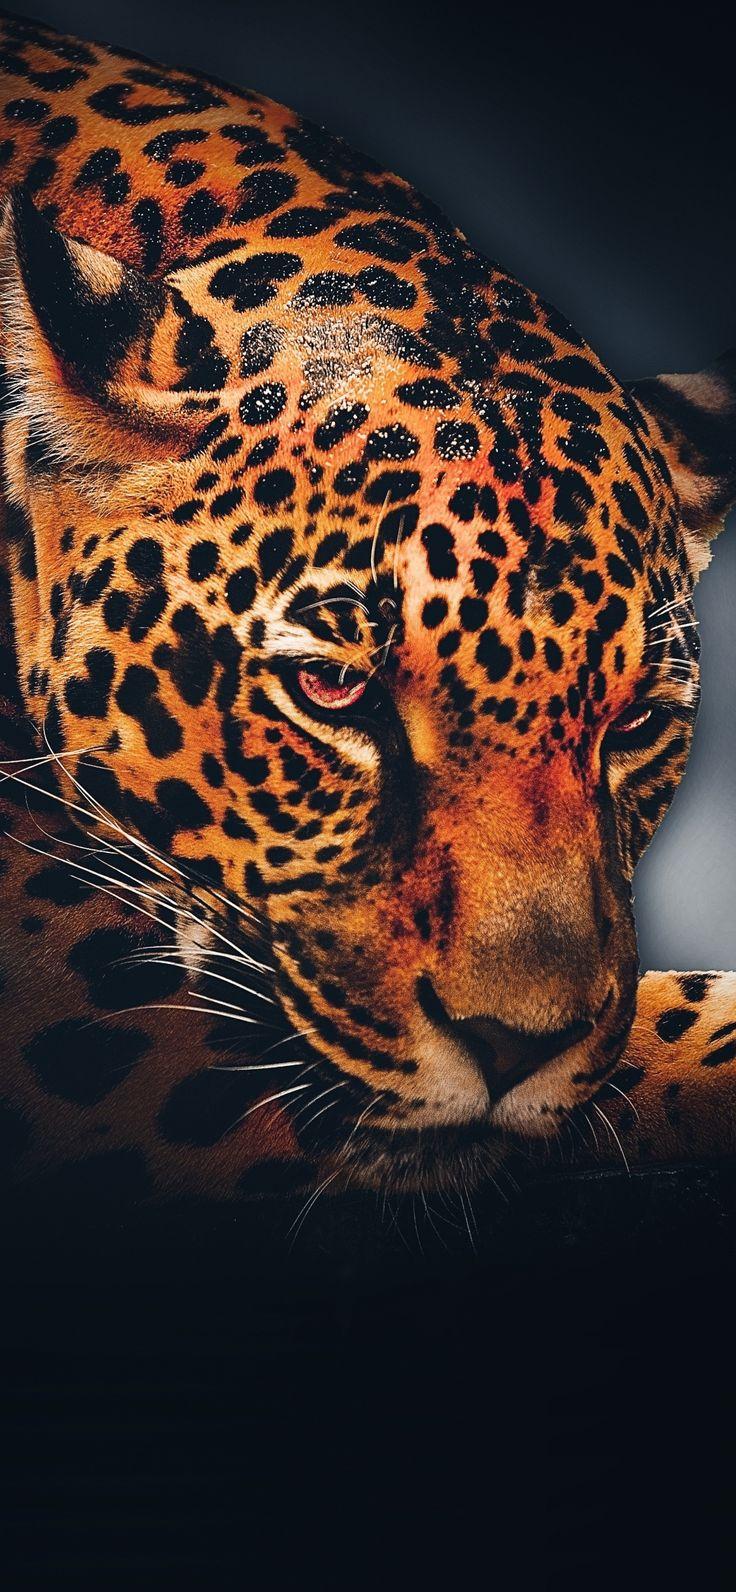 Leopard Animal Relaxed Portrait Wallpaper